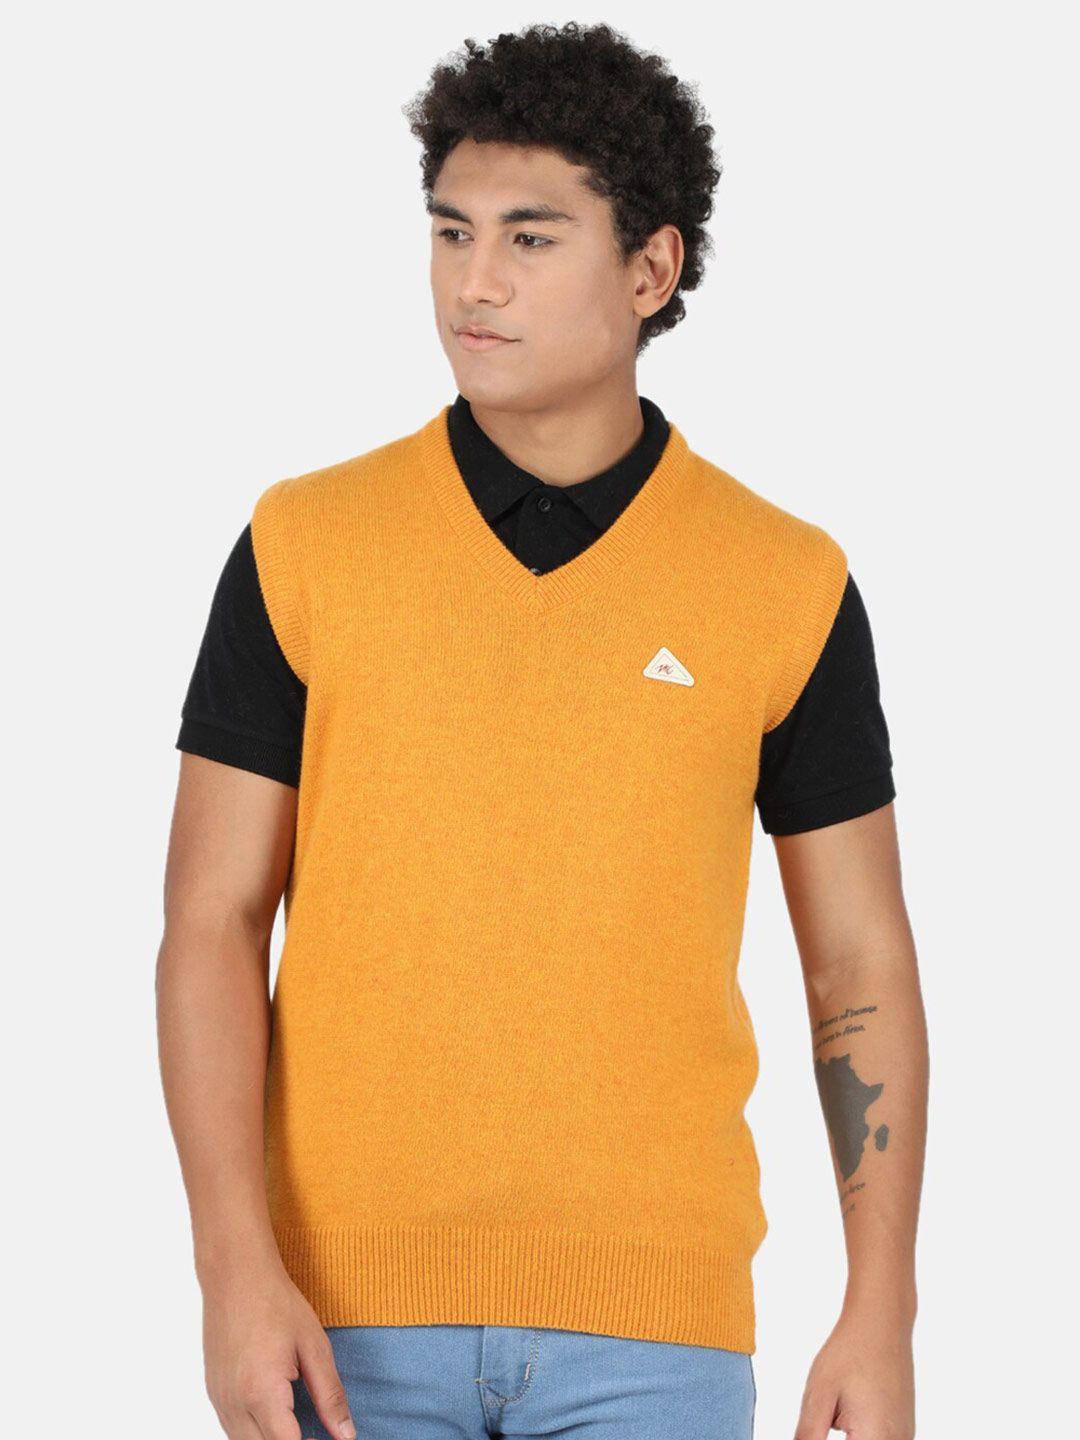 monte carlo men yellow cable knit sweater vest